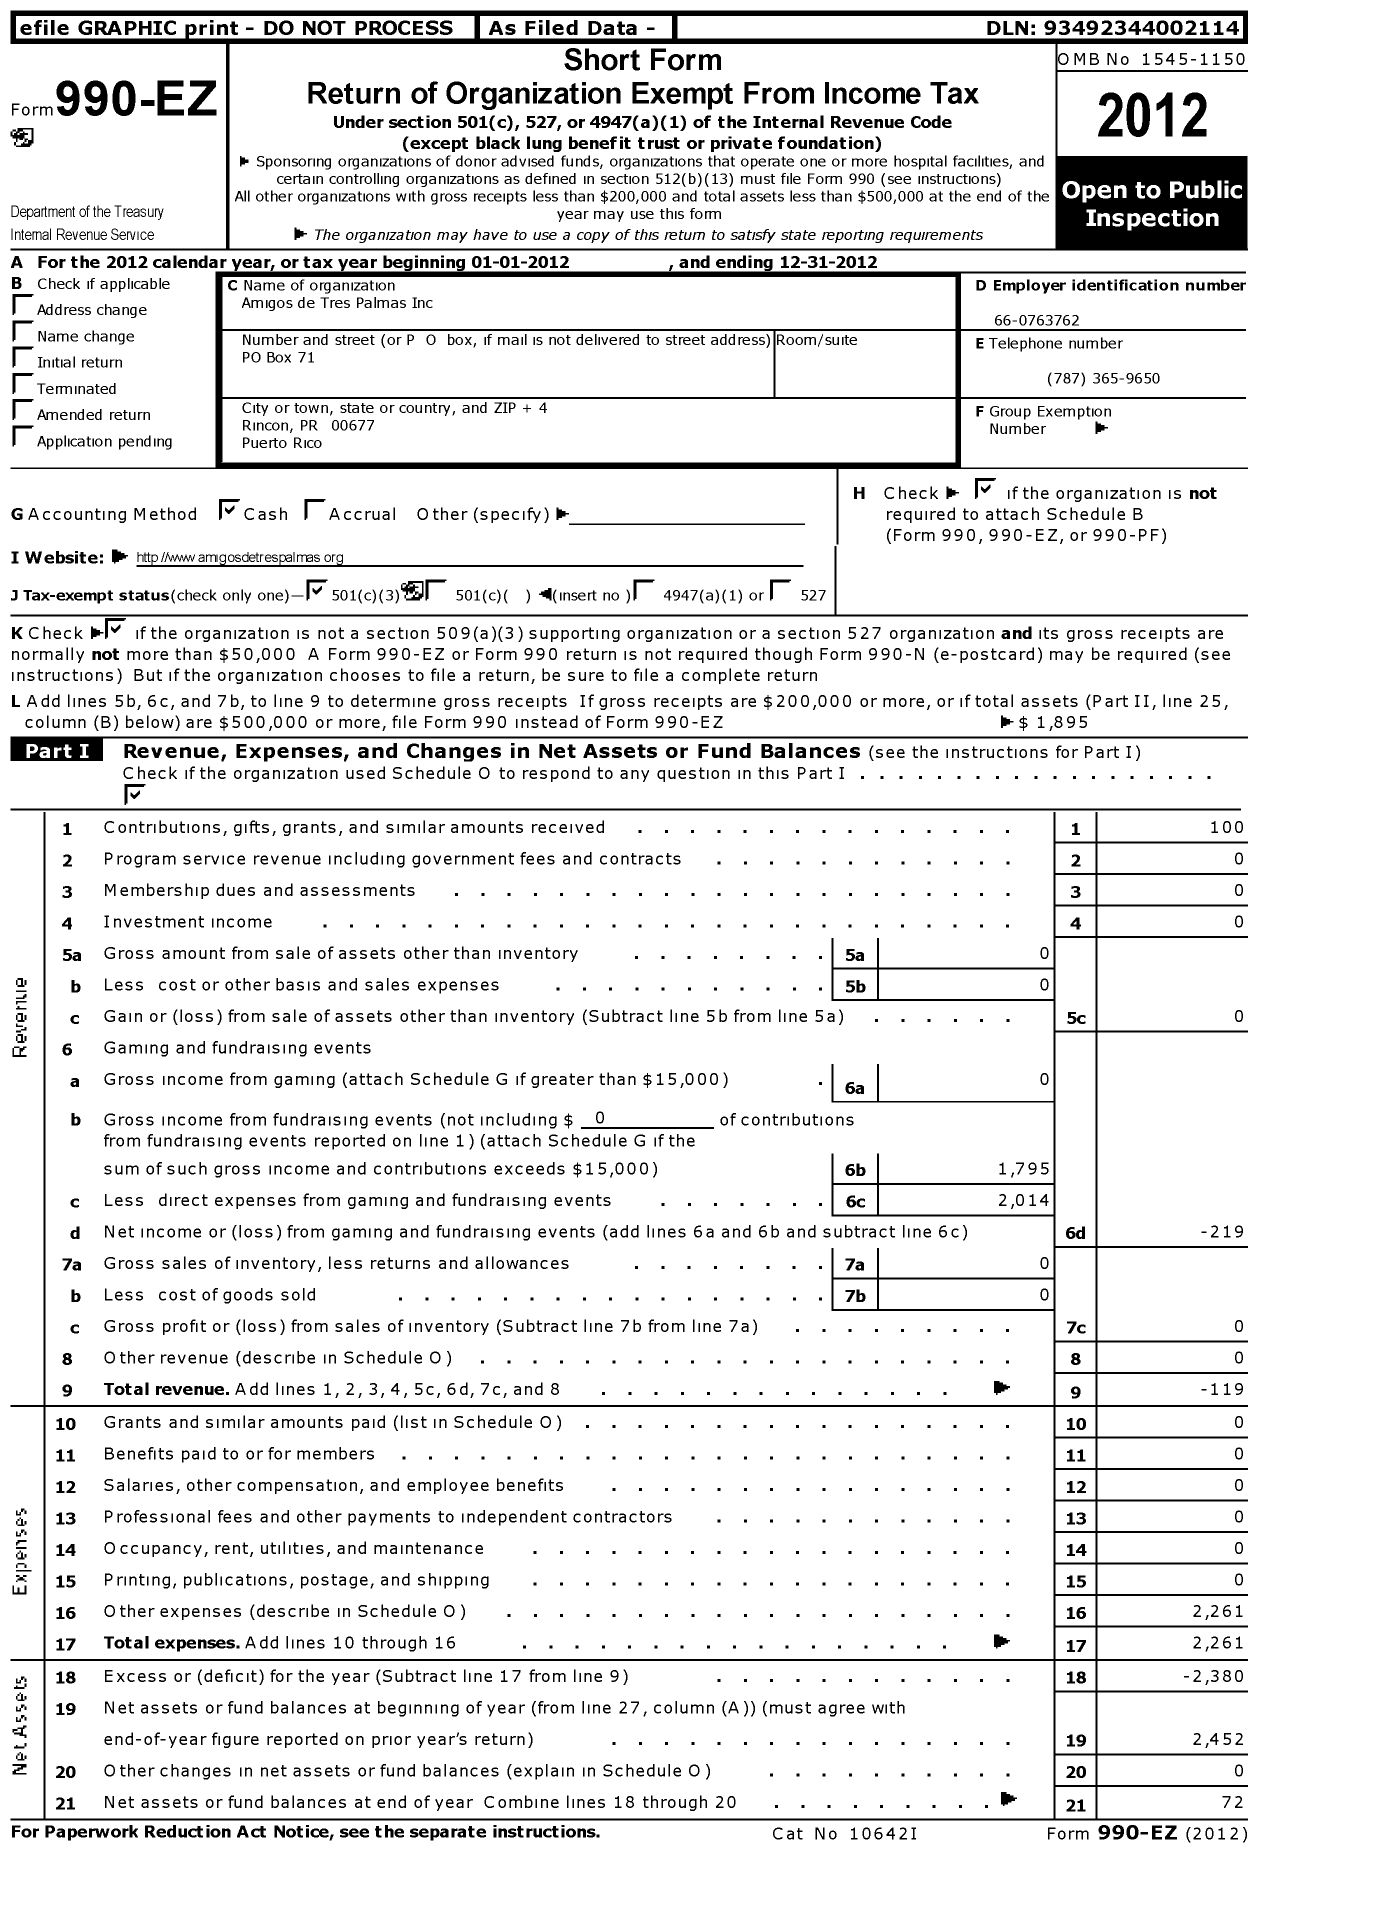 Image of first page of 2012 Form 990EZ for Amigos de Tres Palmas